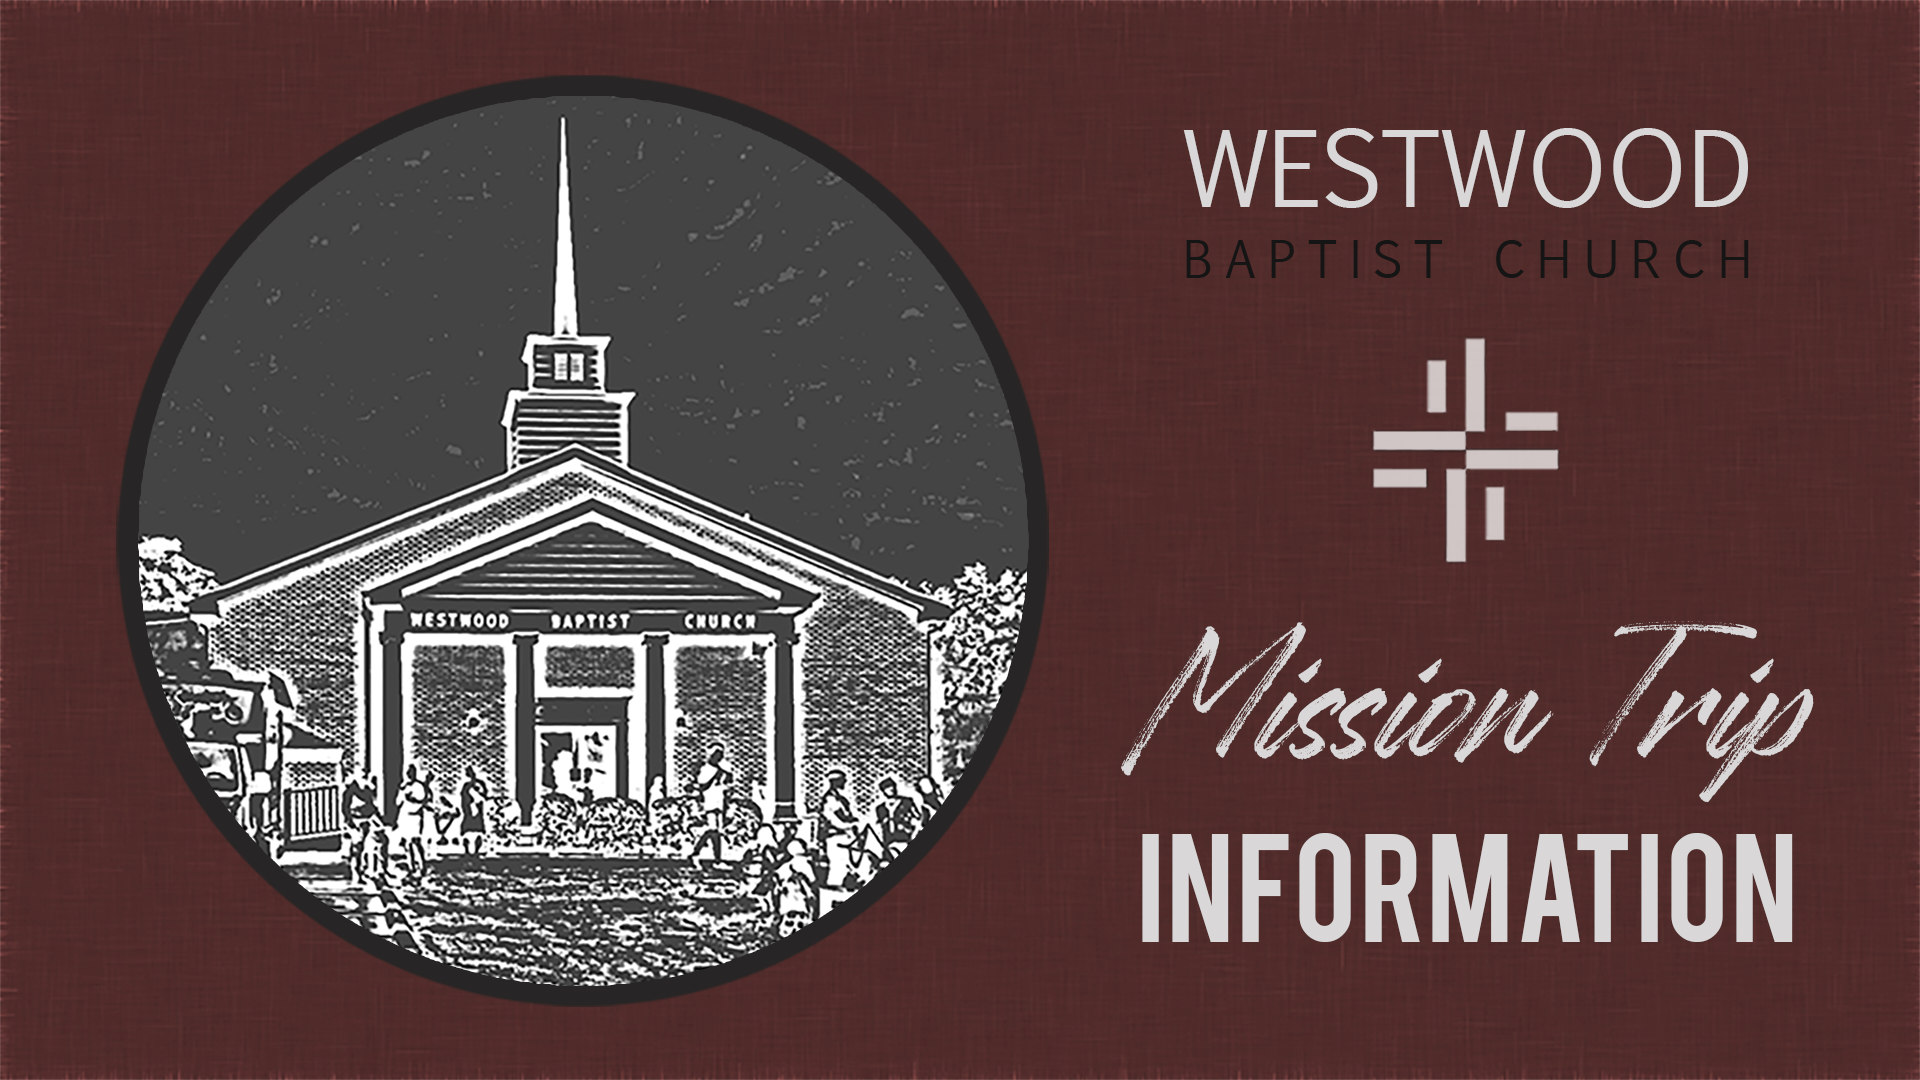 Westwood Mission Trip Information